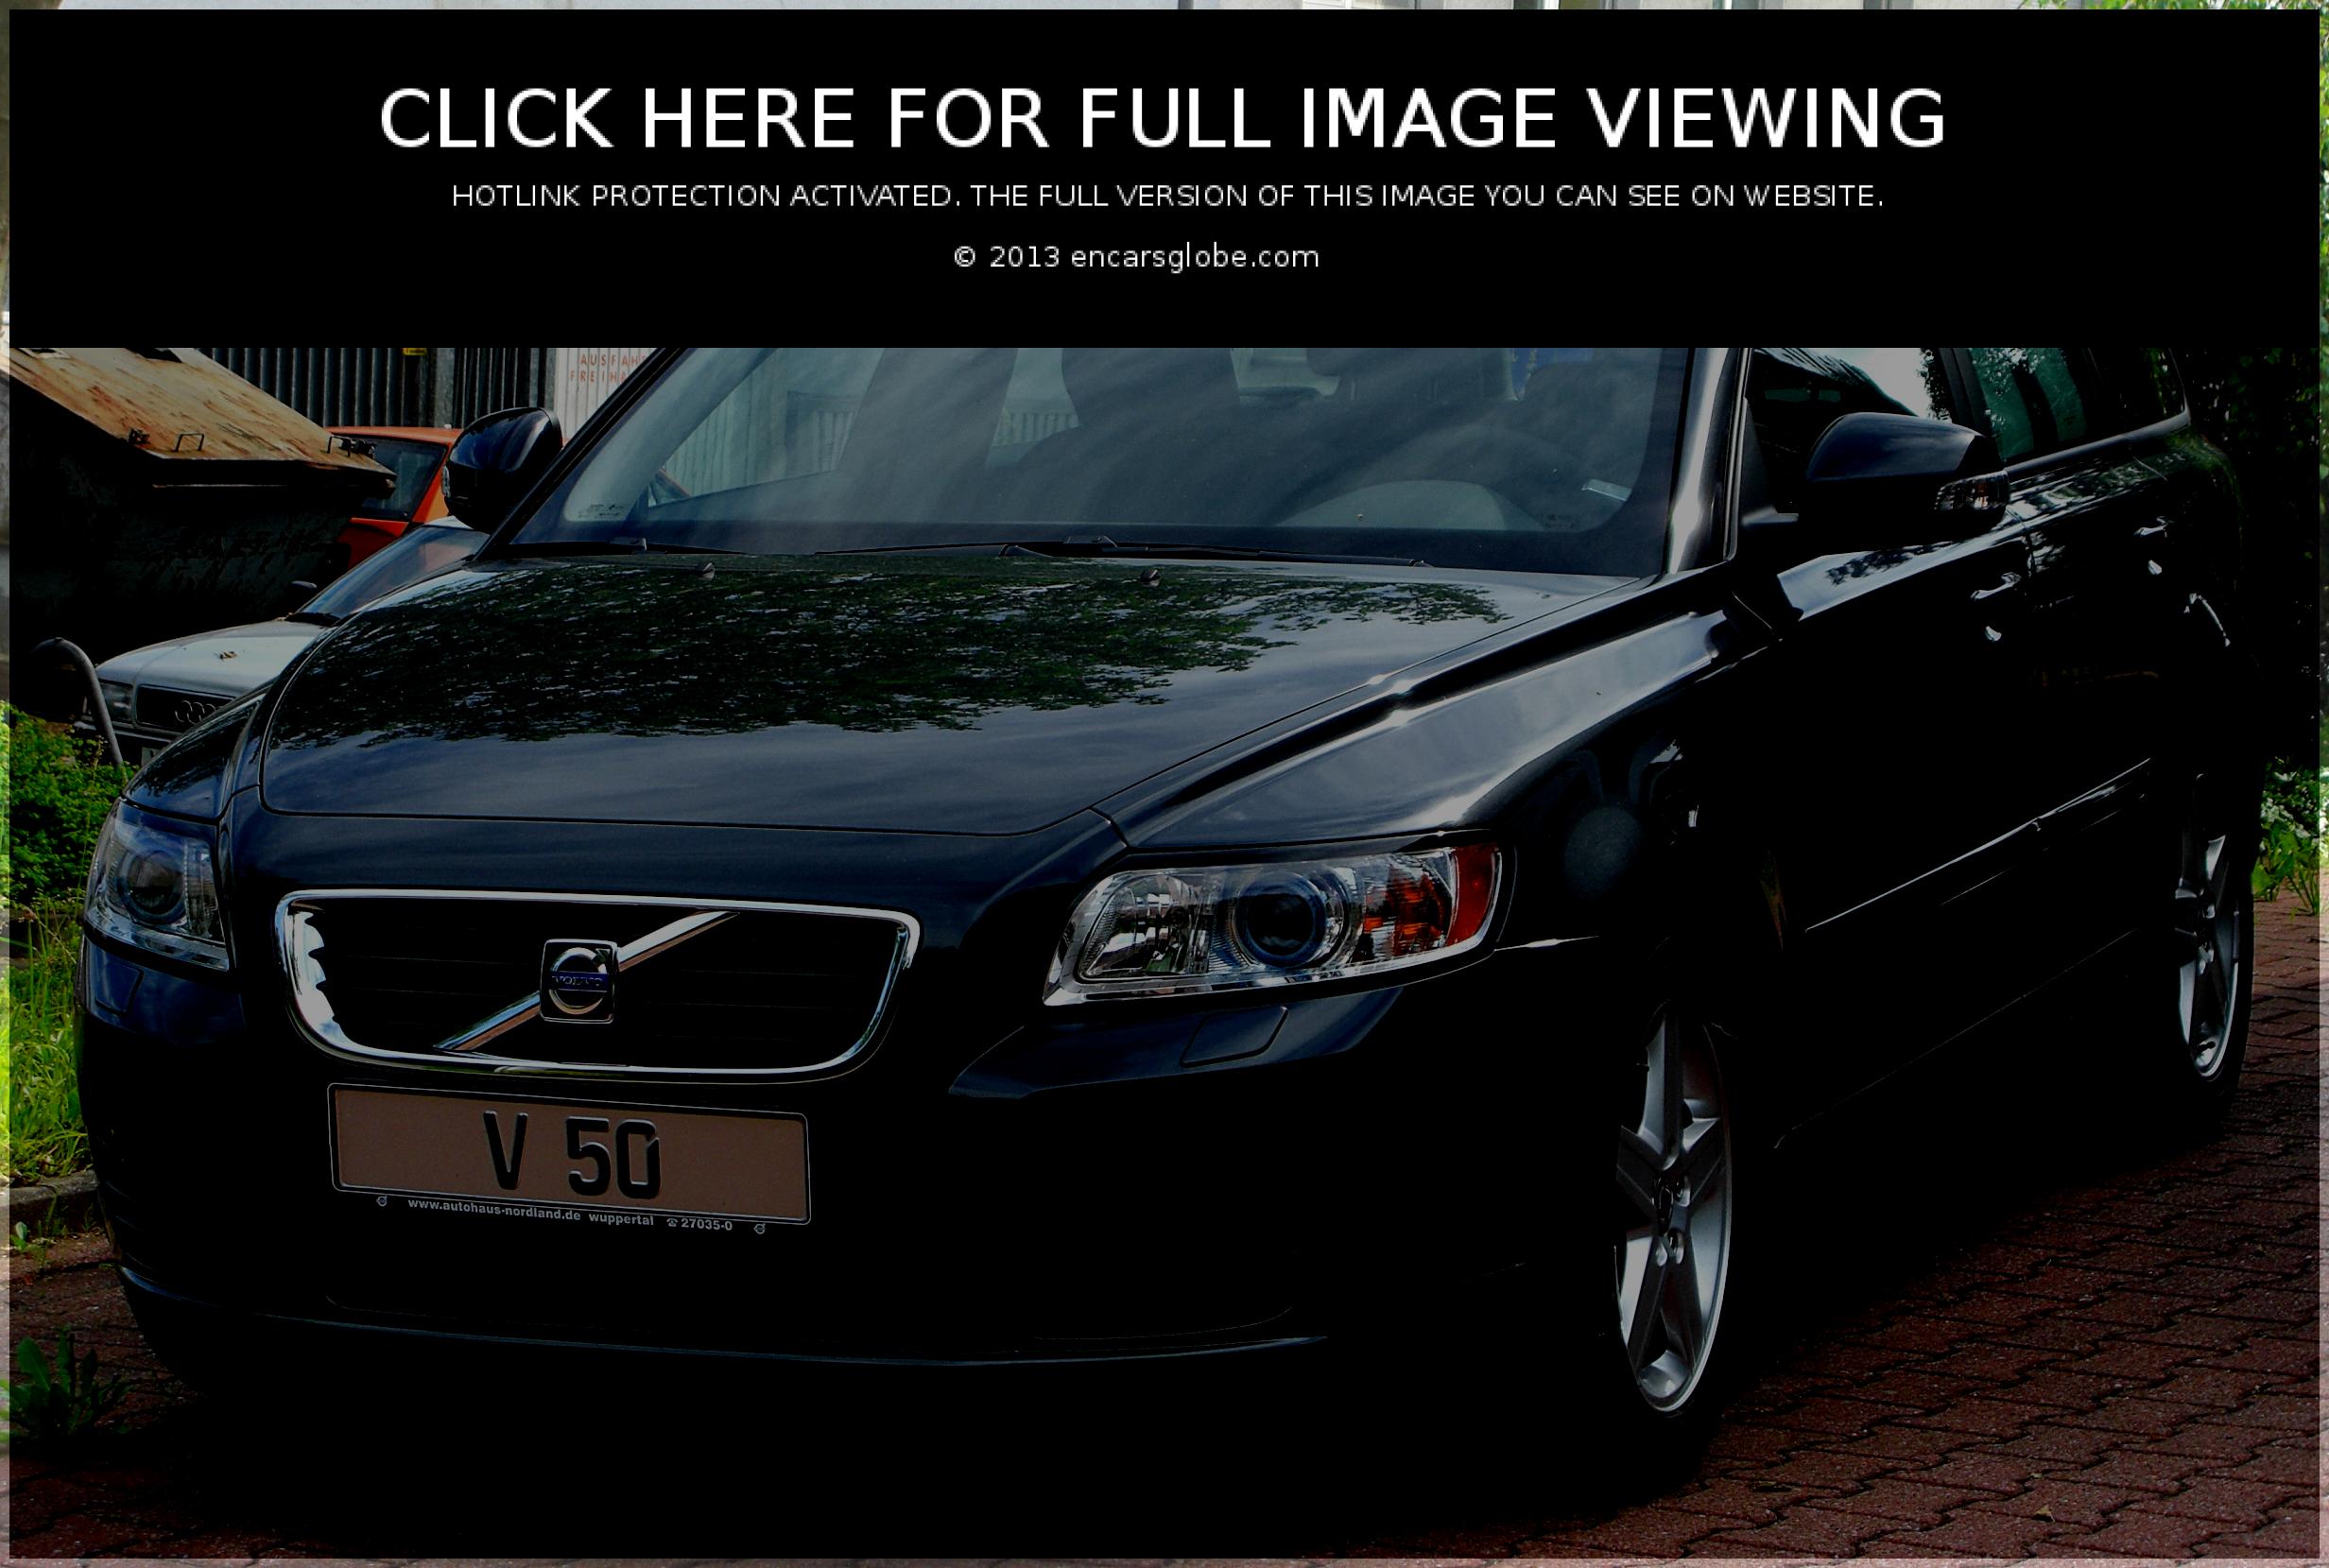 Volvo V50 16D Kinetic (04 image) Size: 2464 x 1659 px | image/jpeg | 22291